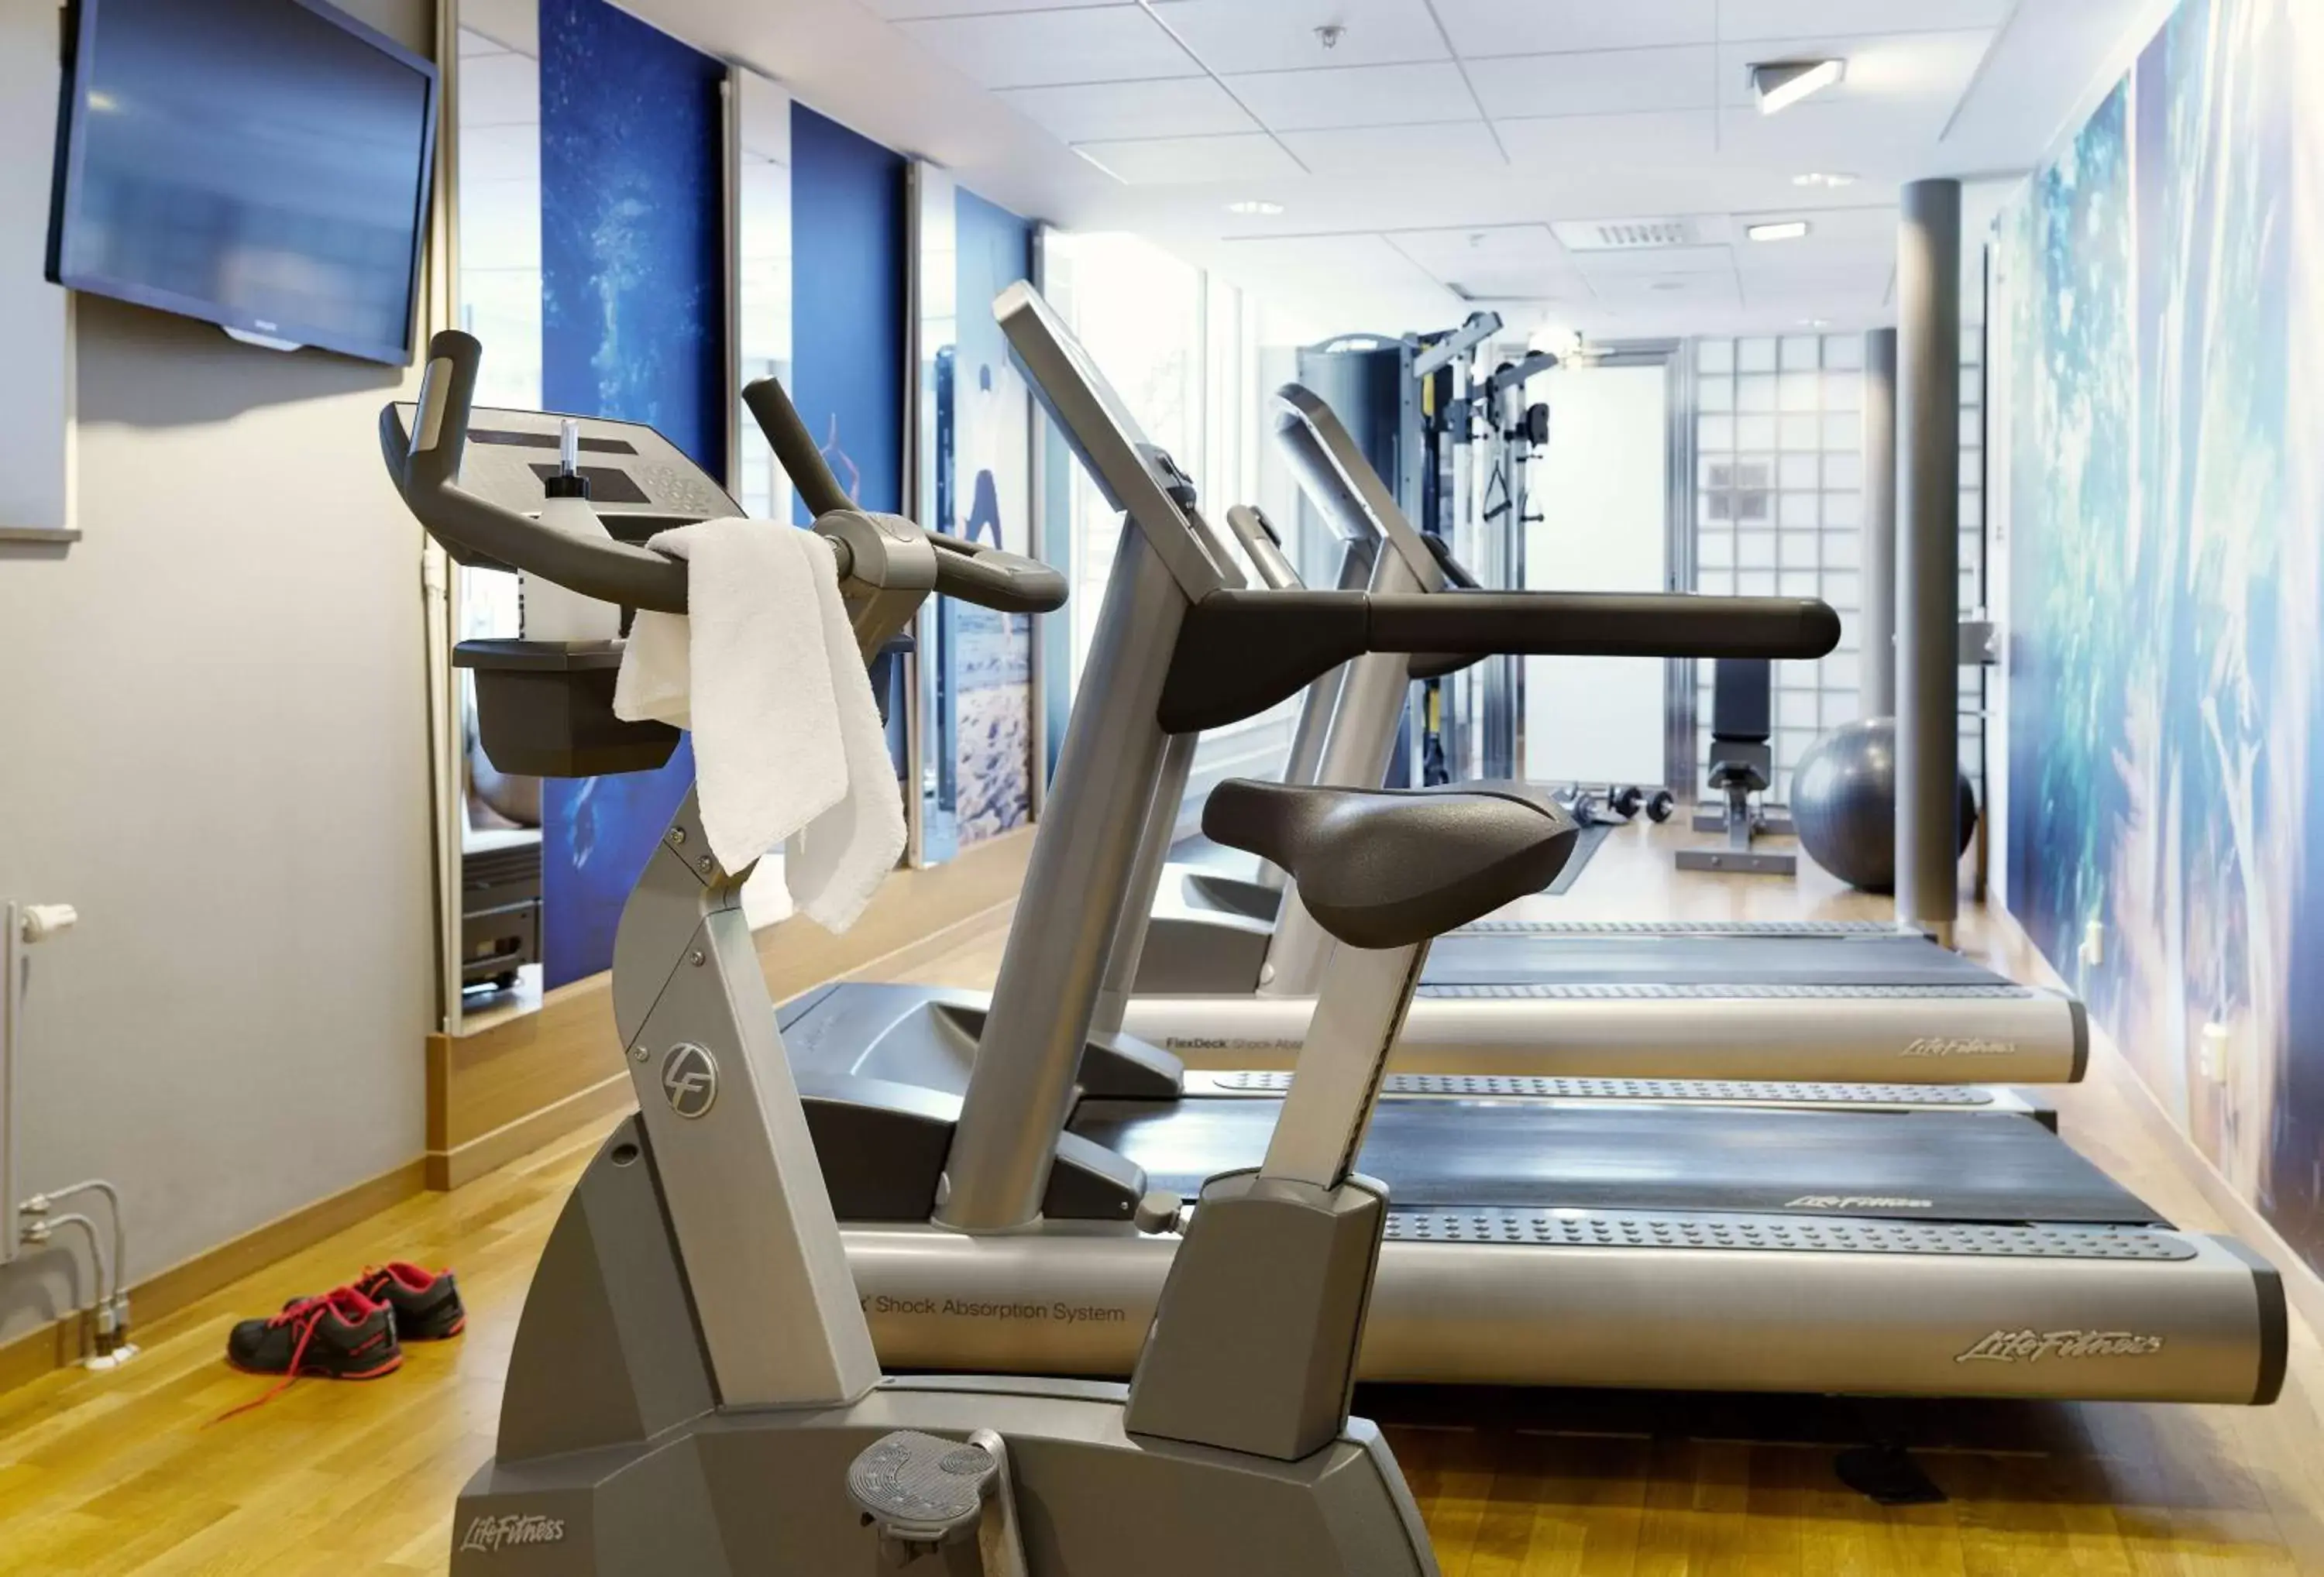 Fitness centre/facilities, Fitness Center/Facilities in Scandic Linköping City